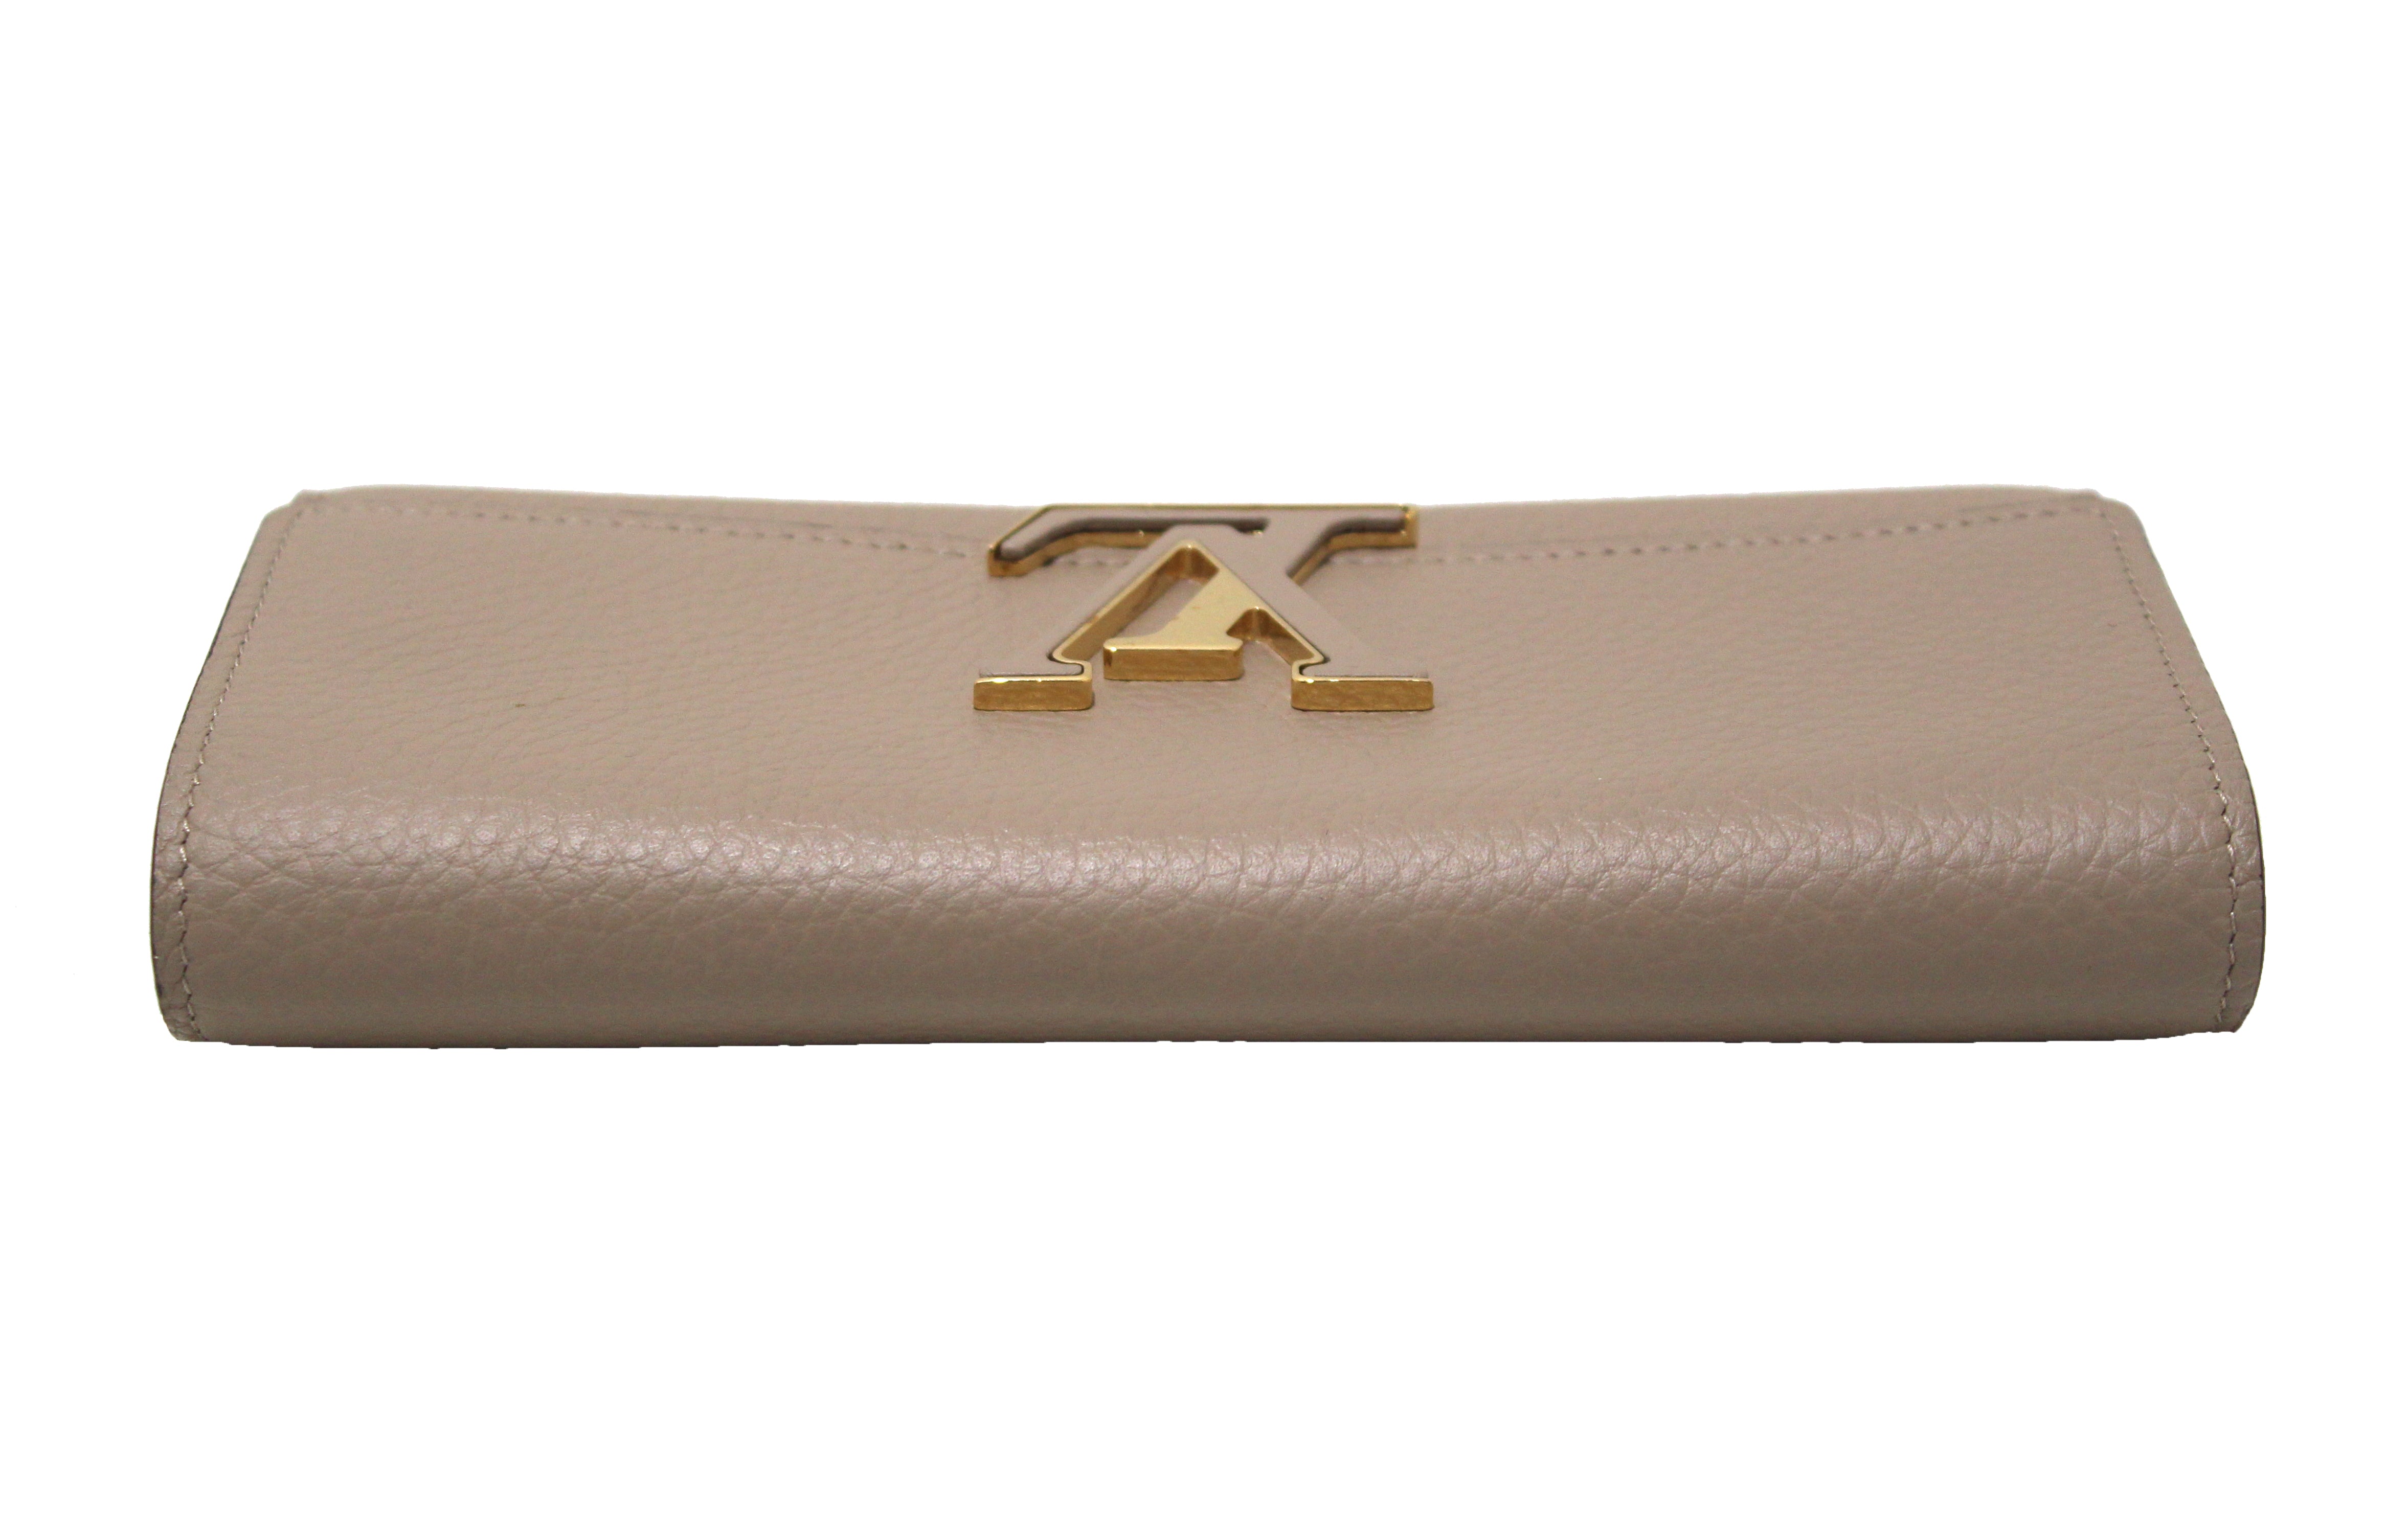 Louis Vuitton Taurillon Leather Portefeiulle Capuccine Wallet – Caroline's  Fashion Luxuries